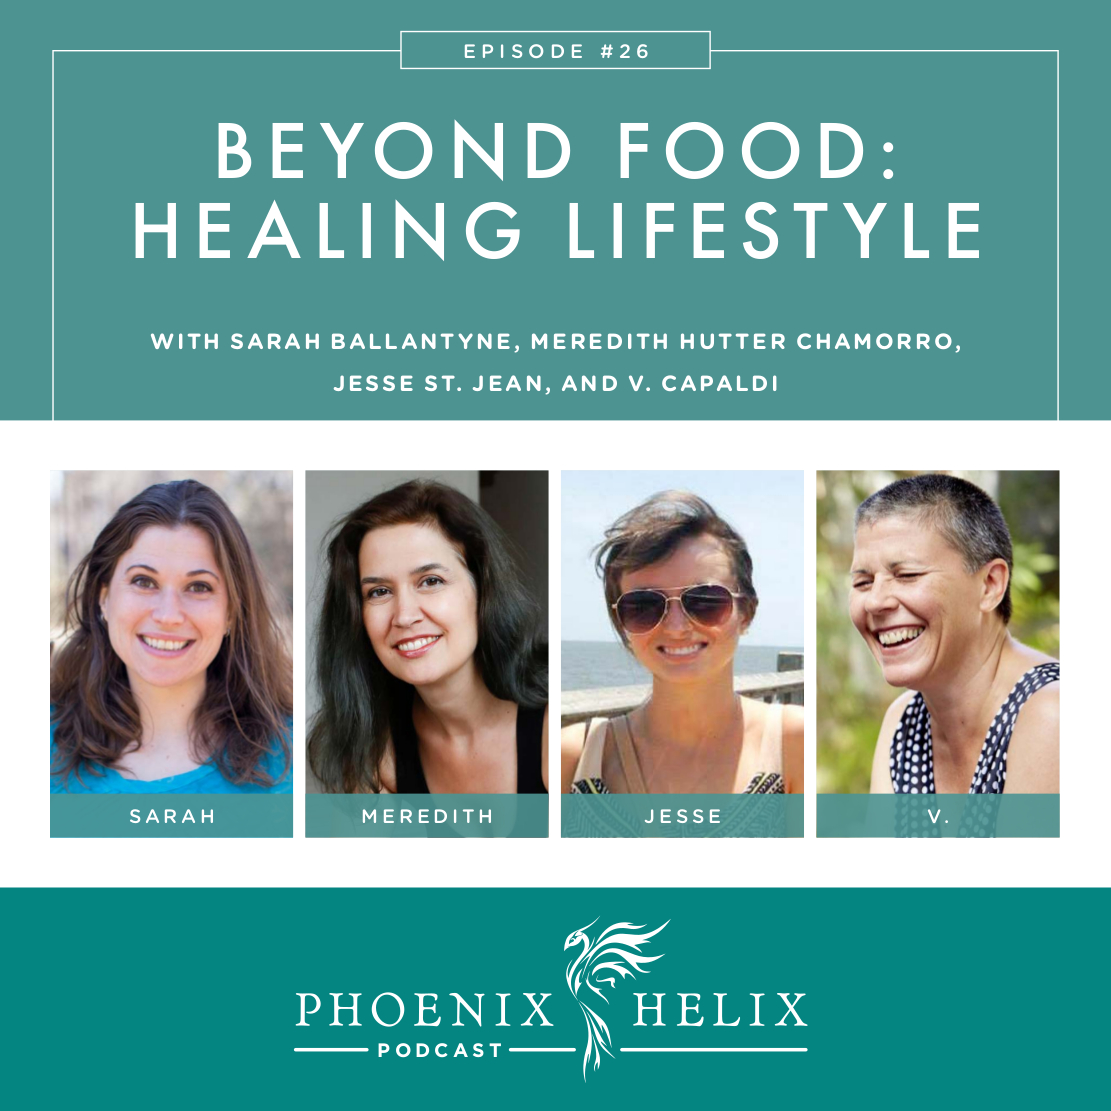 Beyond Food - Healing Lifestyle | Phoenix Helix Podcast